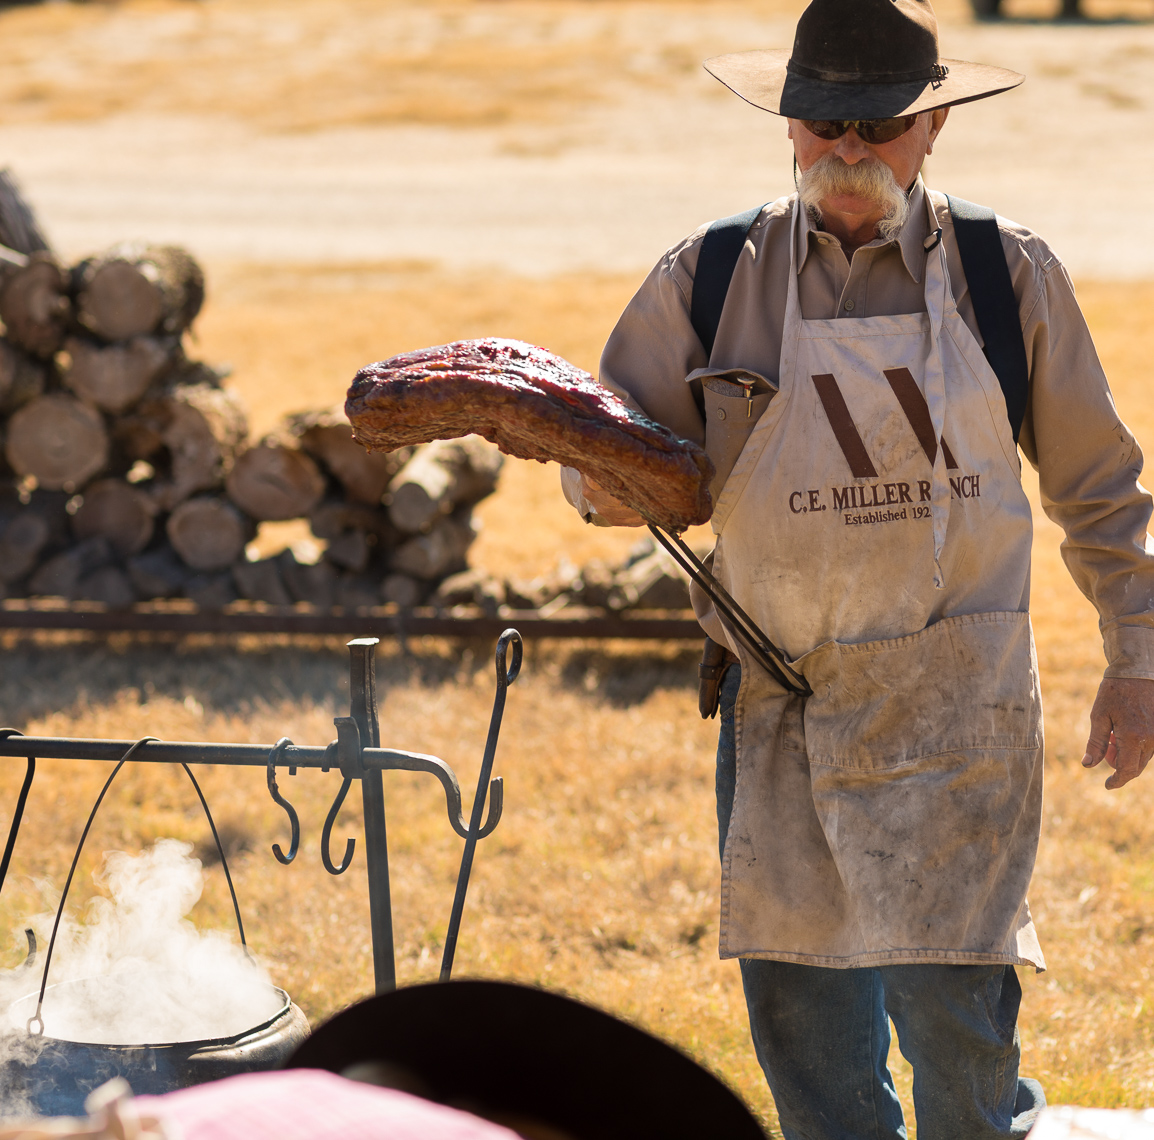 Chuck-Wagon-Food-Cooking-South-Texas-Ranch-Jason-Risner-Photographt-8459-Edit